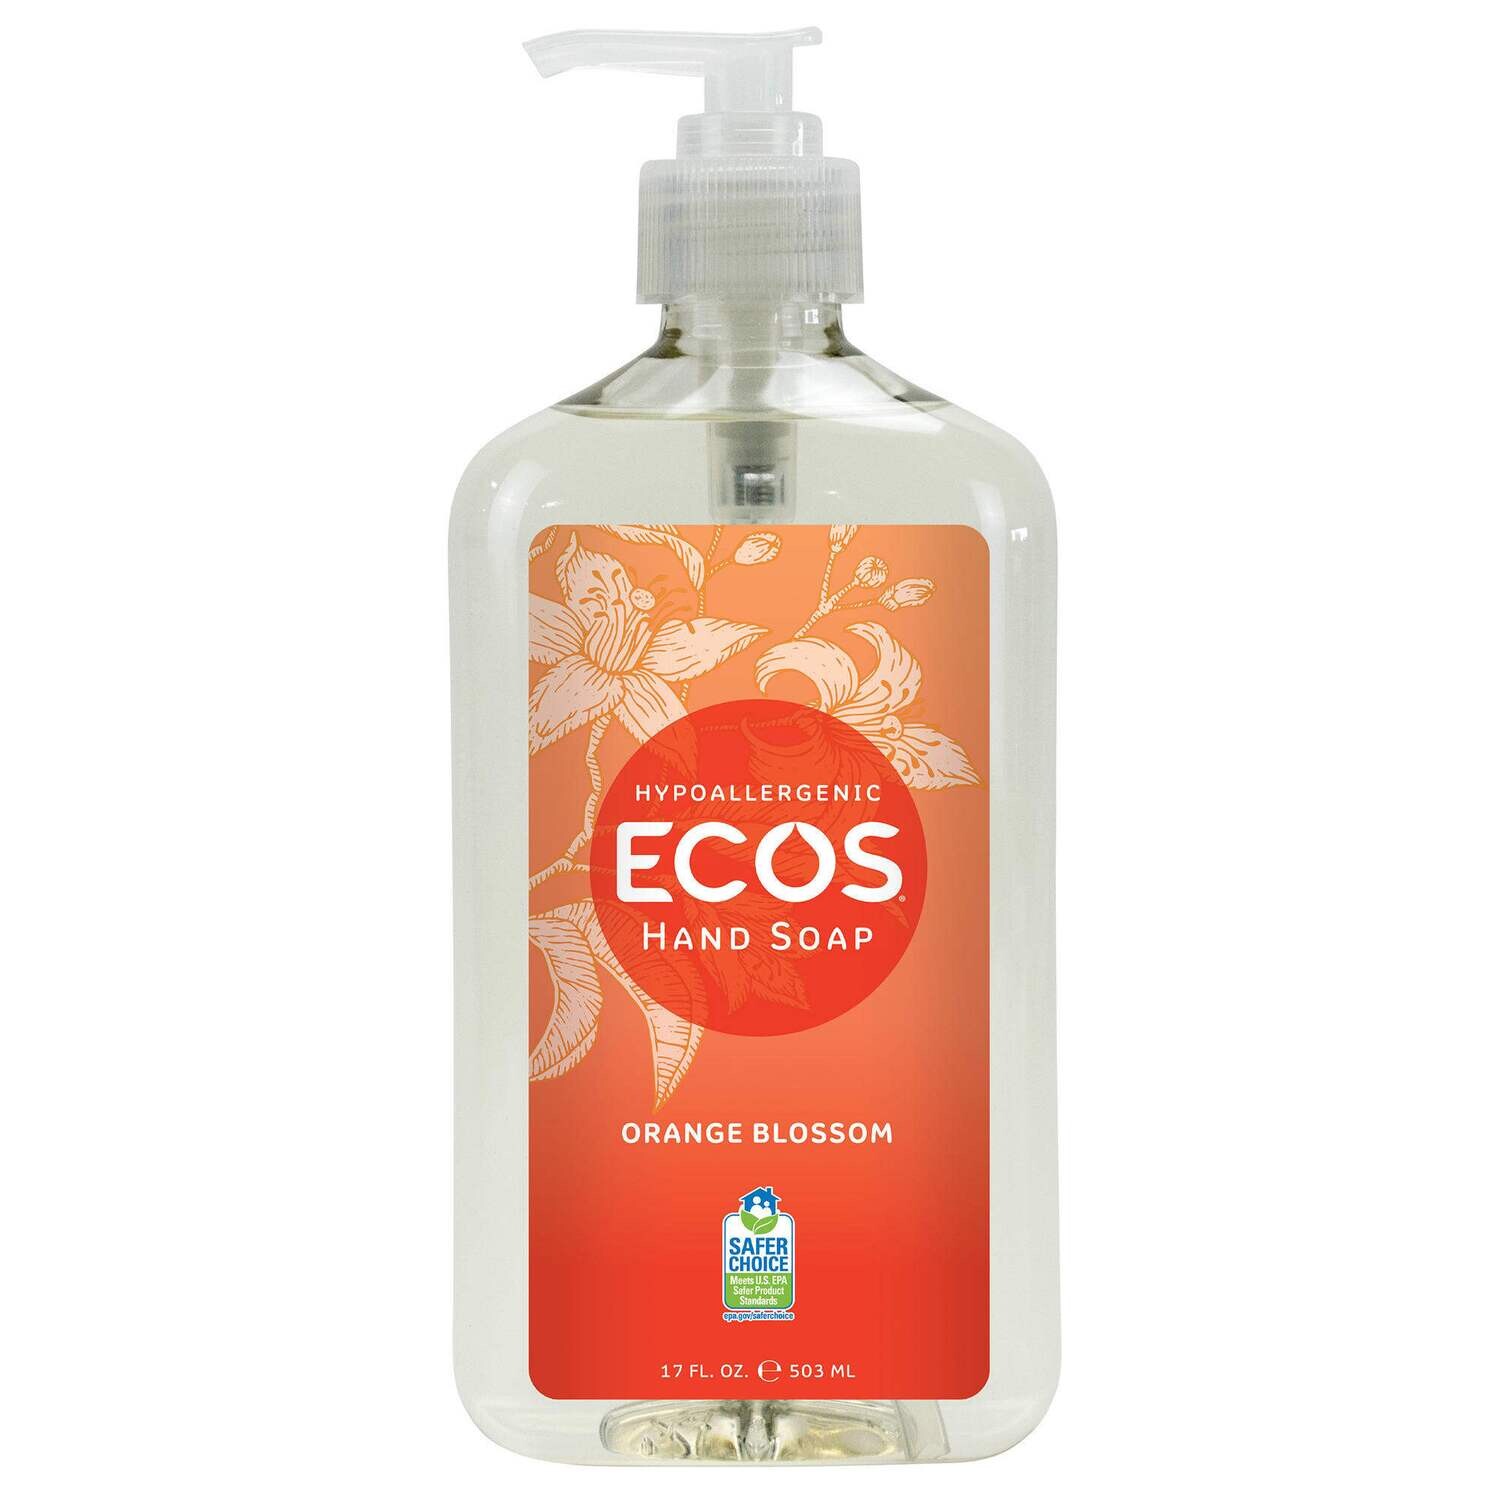 ECOS Hypoallergenic Hand soap,Orange blossom - 17oz